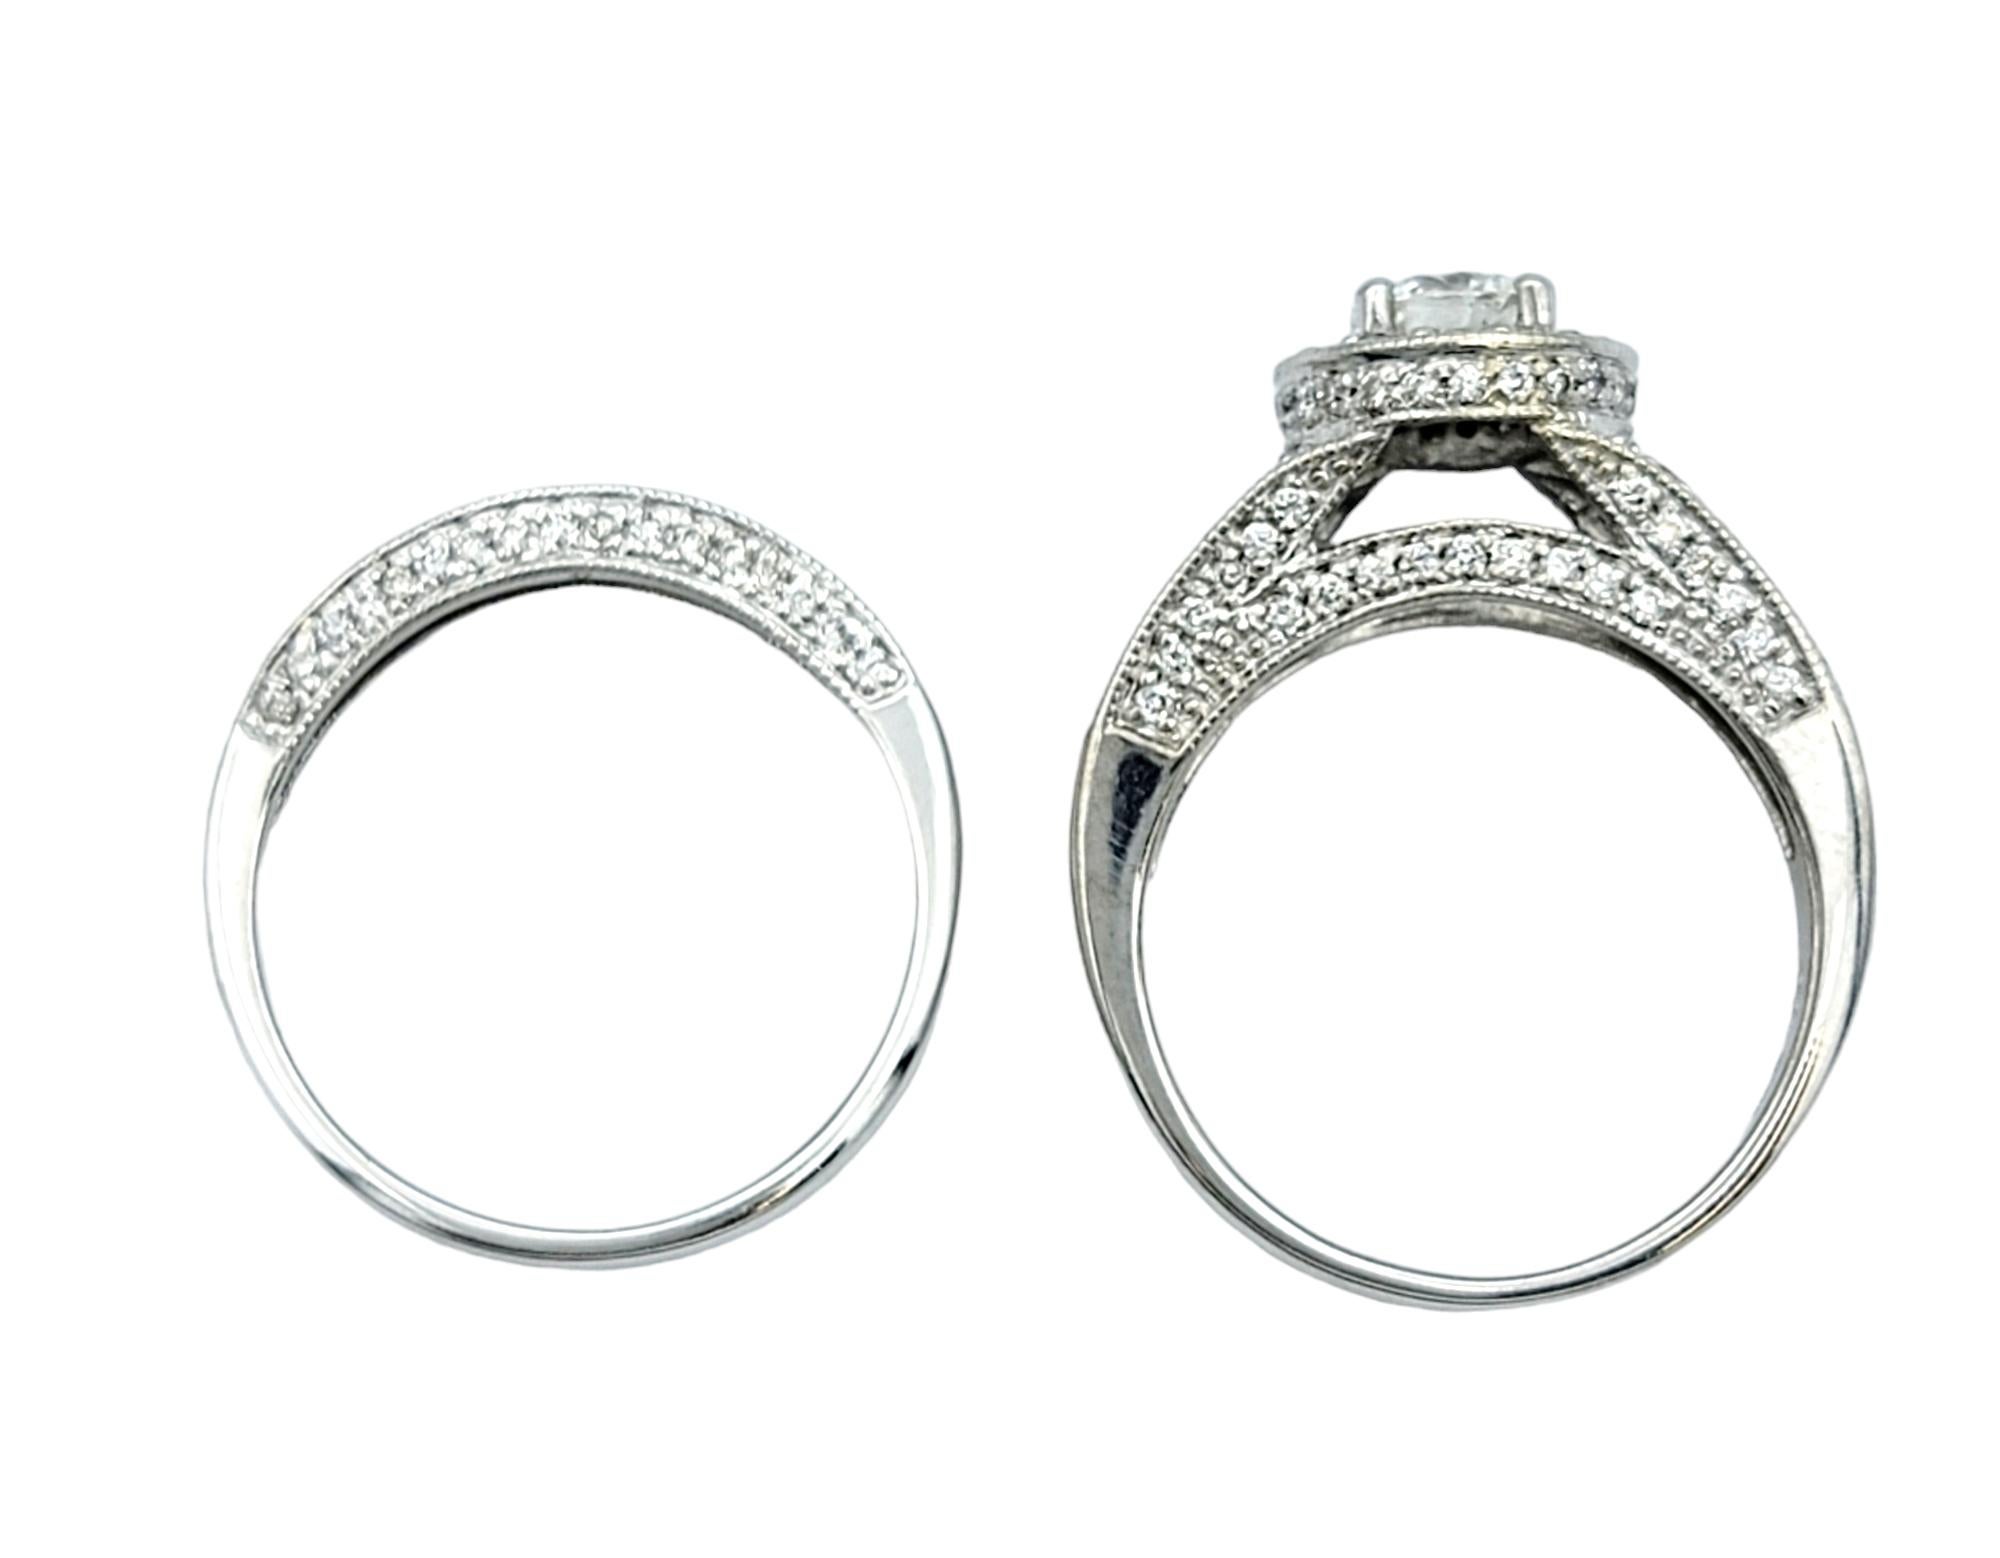 Pavé Diamond Halo Style Wedding Ring Set with Milgrain in 14 Karat White Gold For Sale 1